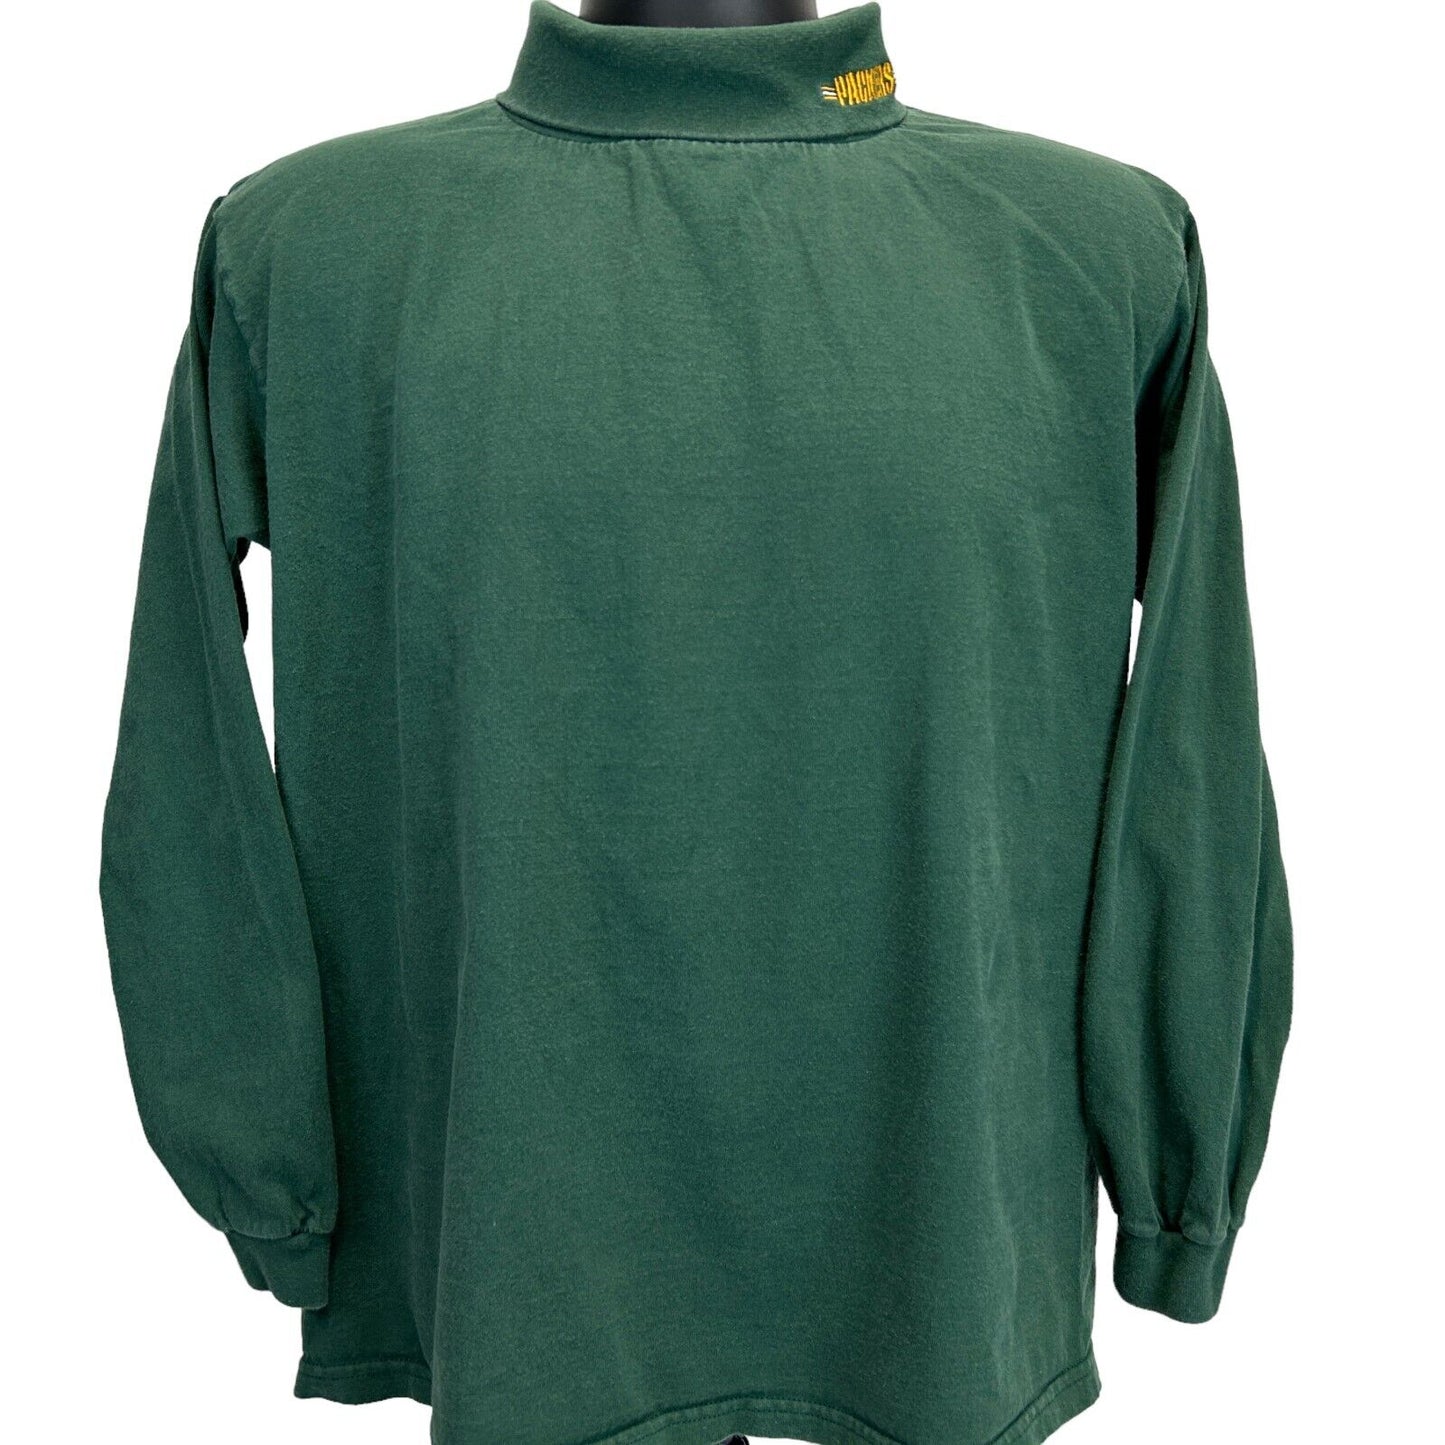 Green Bay Packers Turtleneck T Shirt NFL Football Long Sleeve Green Tee Medium